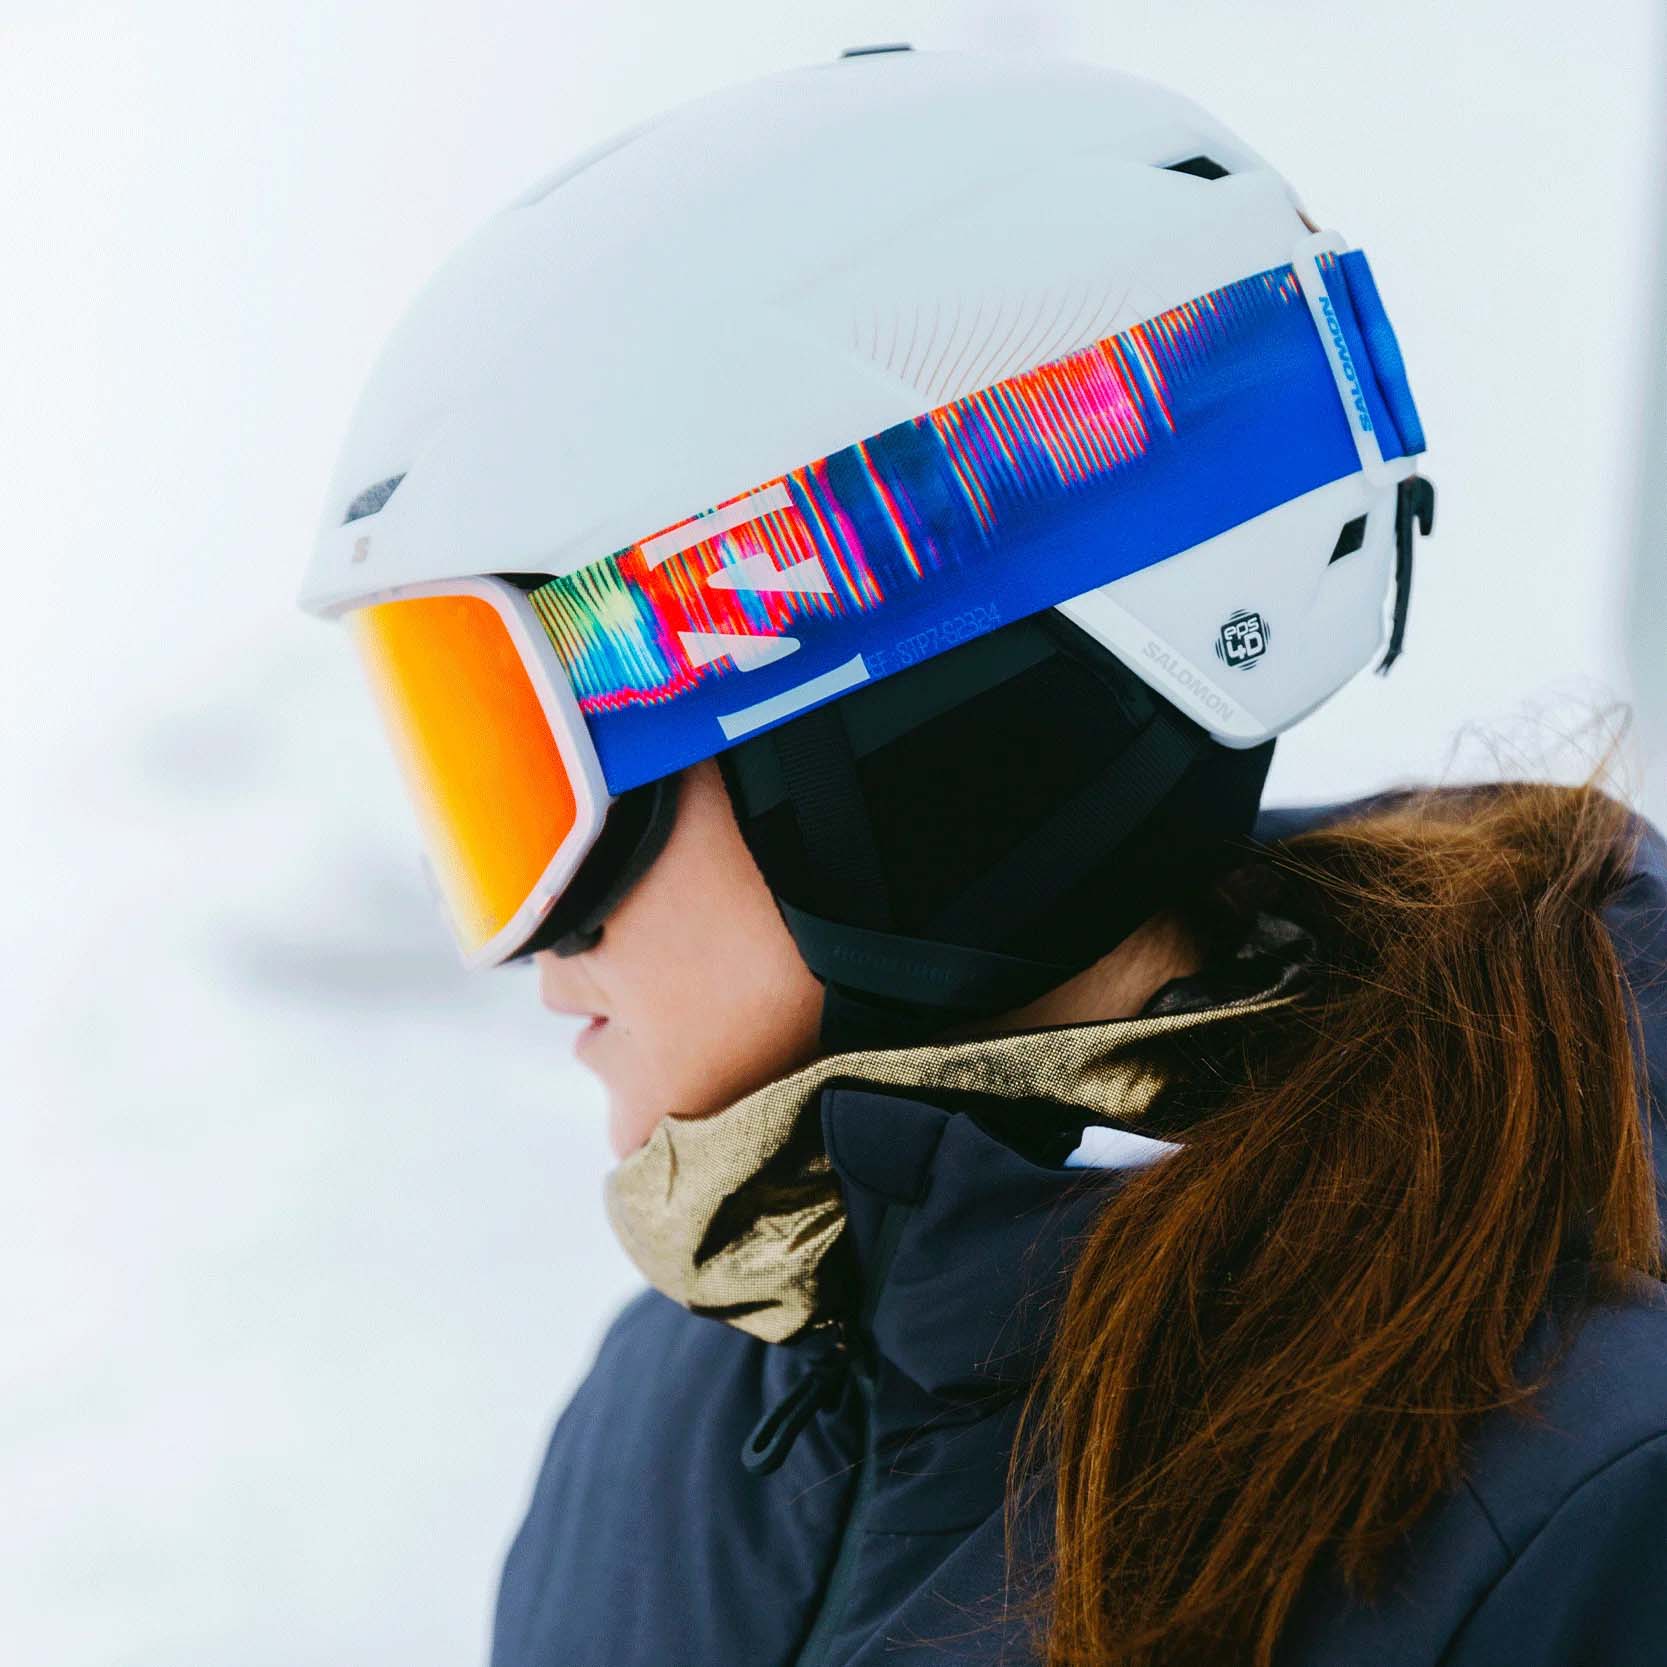 Salomon Icon LT Pro Women's Snowboard/Ski Helmet